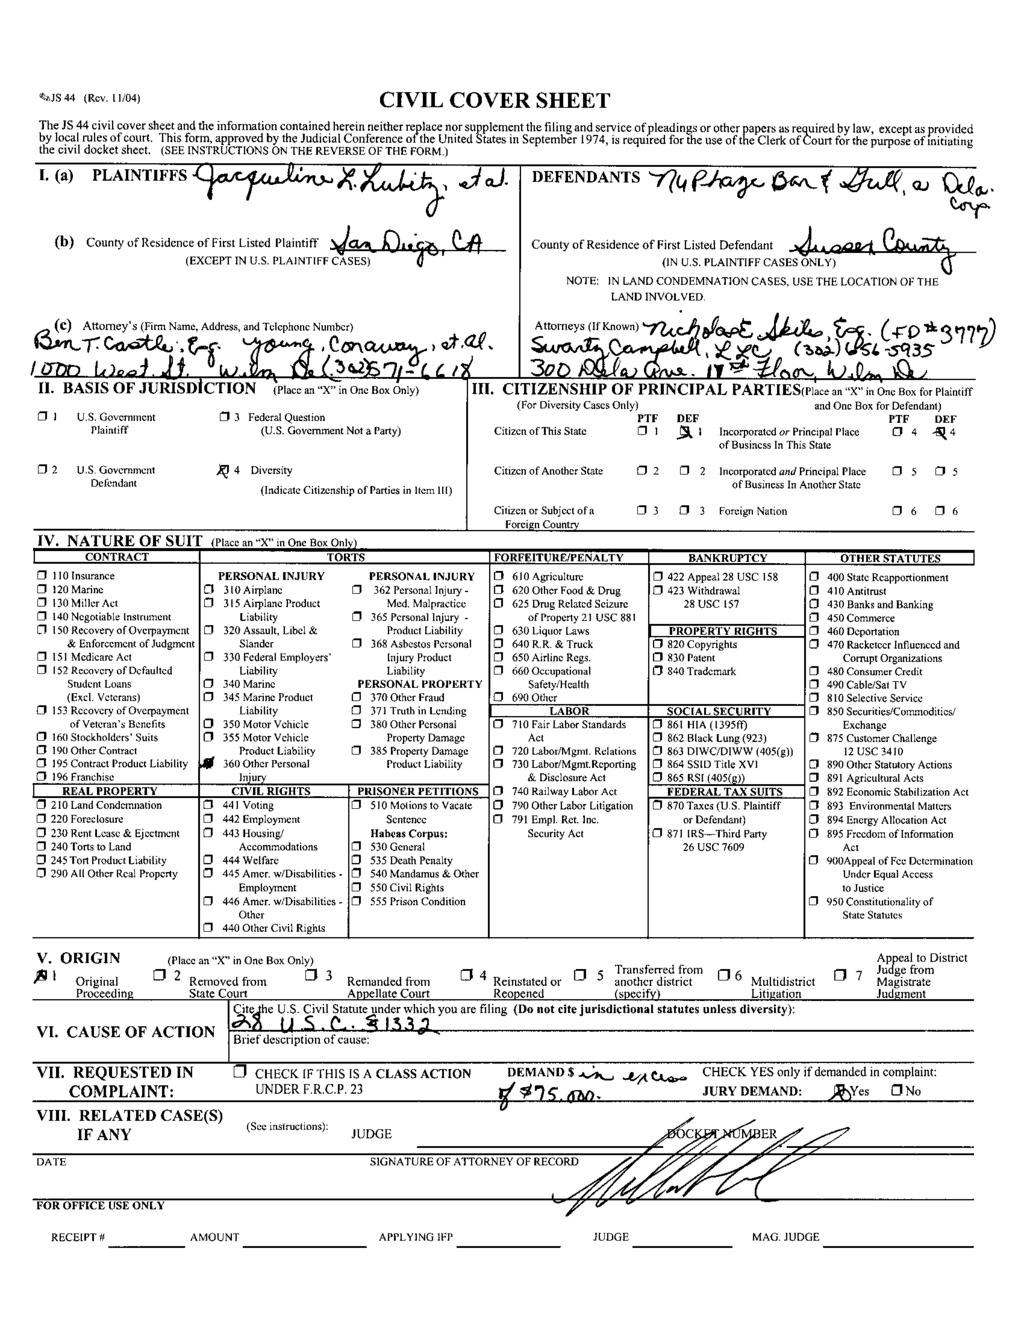 Case 1:06-cv-00210-MPT Document